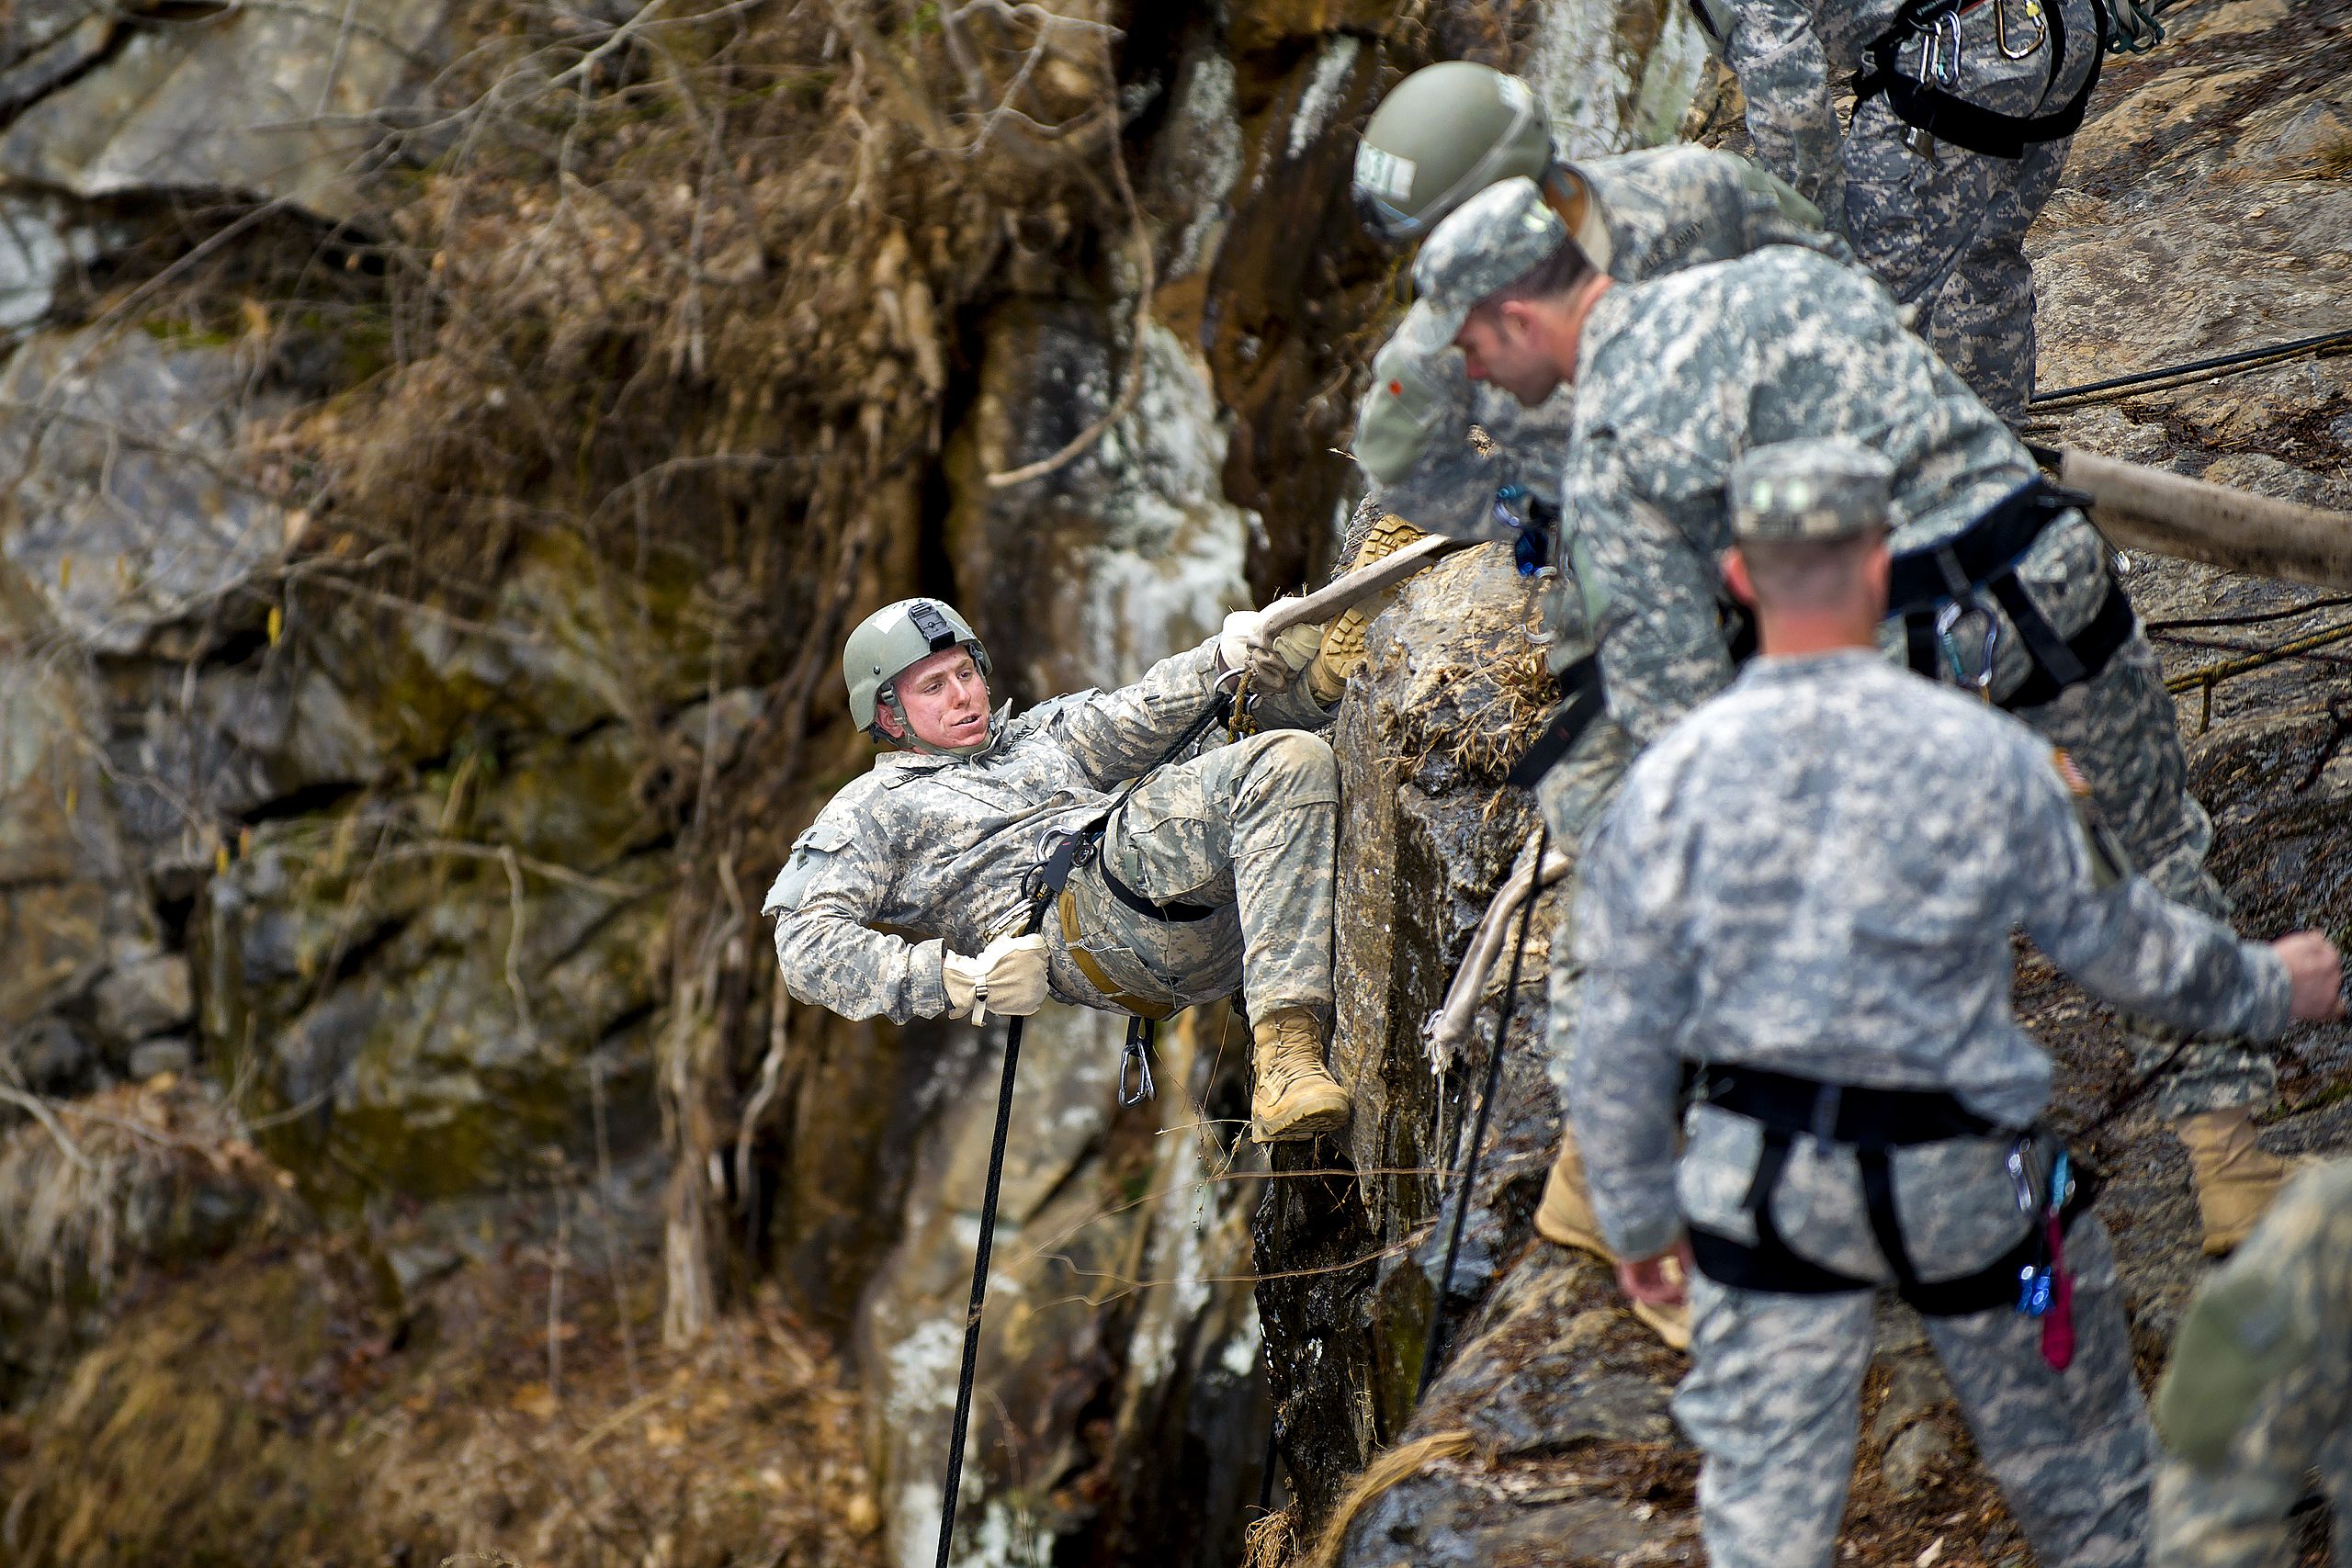 File:Flickr - The U.S. Army - Ranger rappel.jpg - Wikipedia